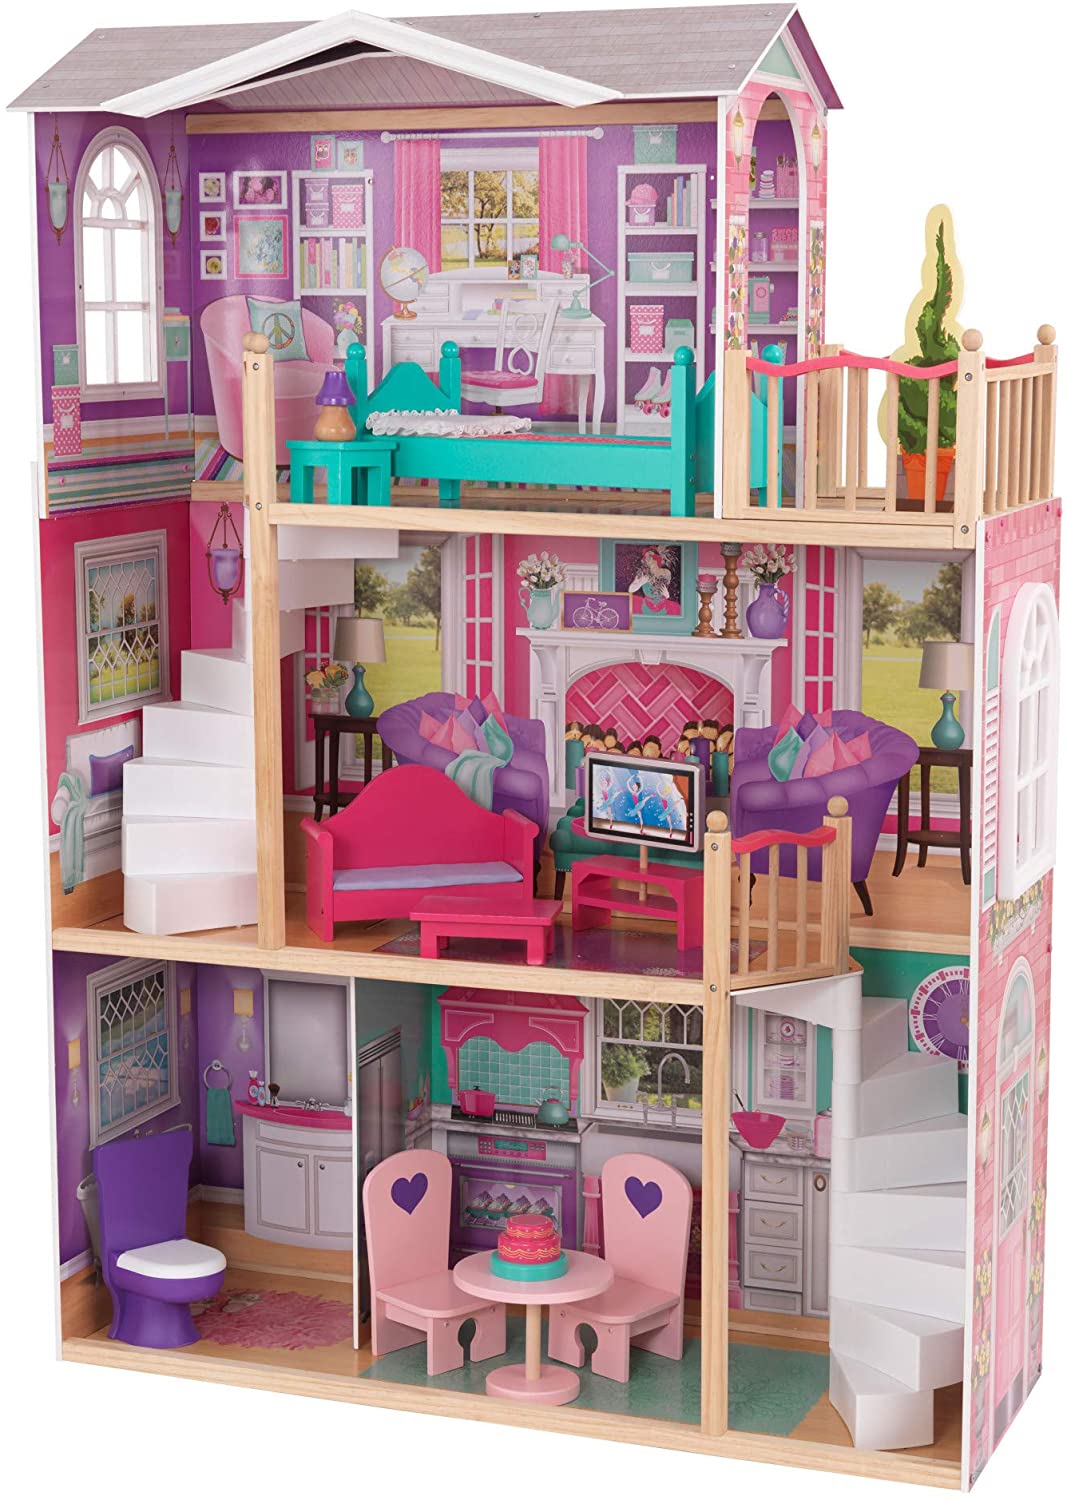 18" KidKraft Dollhouse Doll Manor w/ 12 Furniture Accessories $125 + Free Shipping